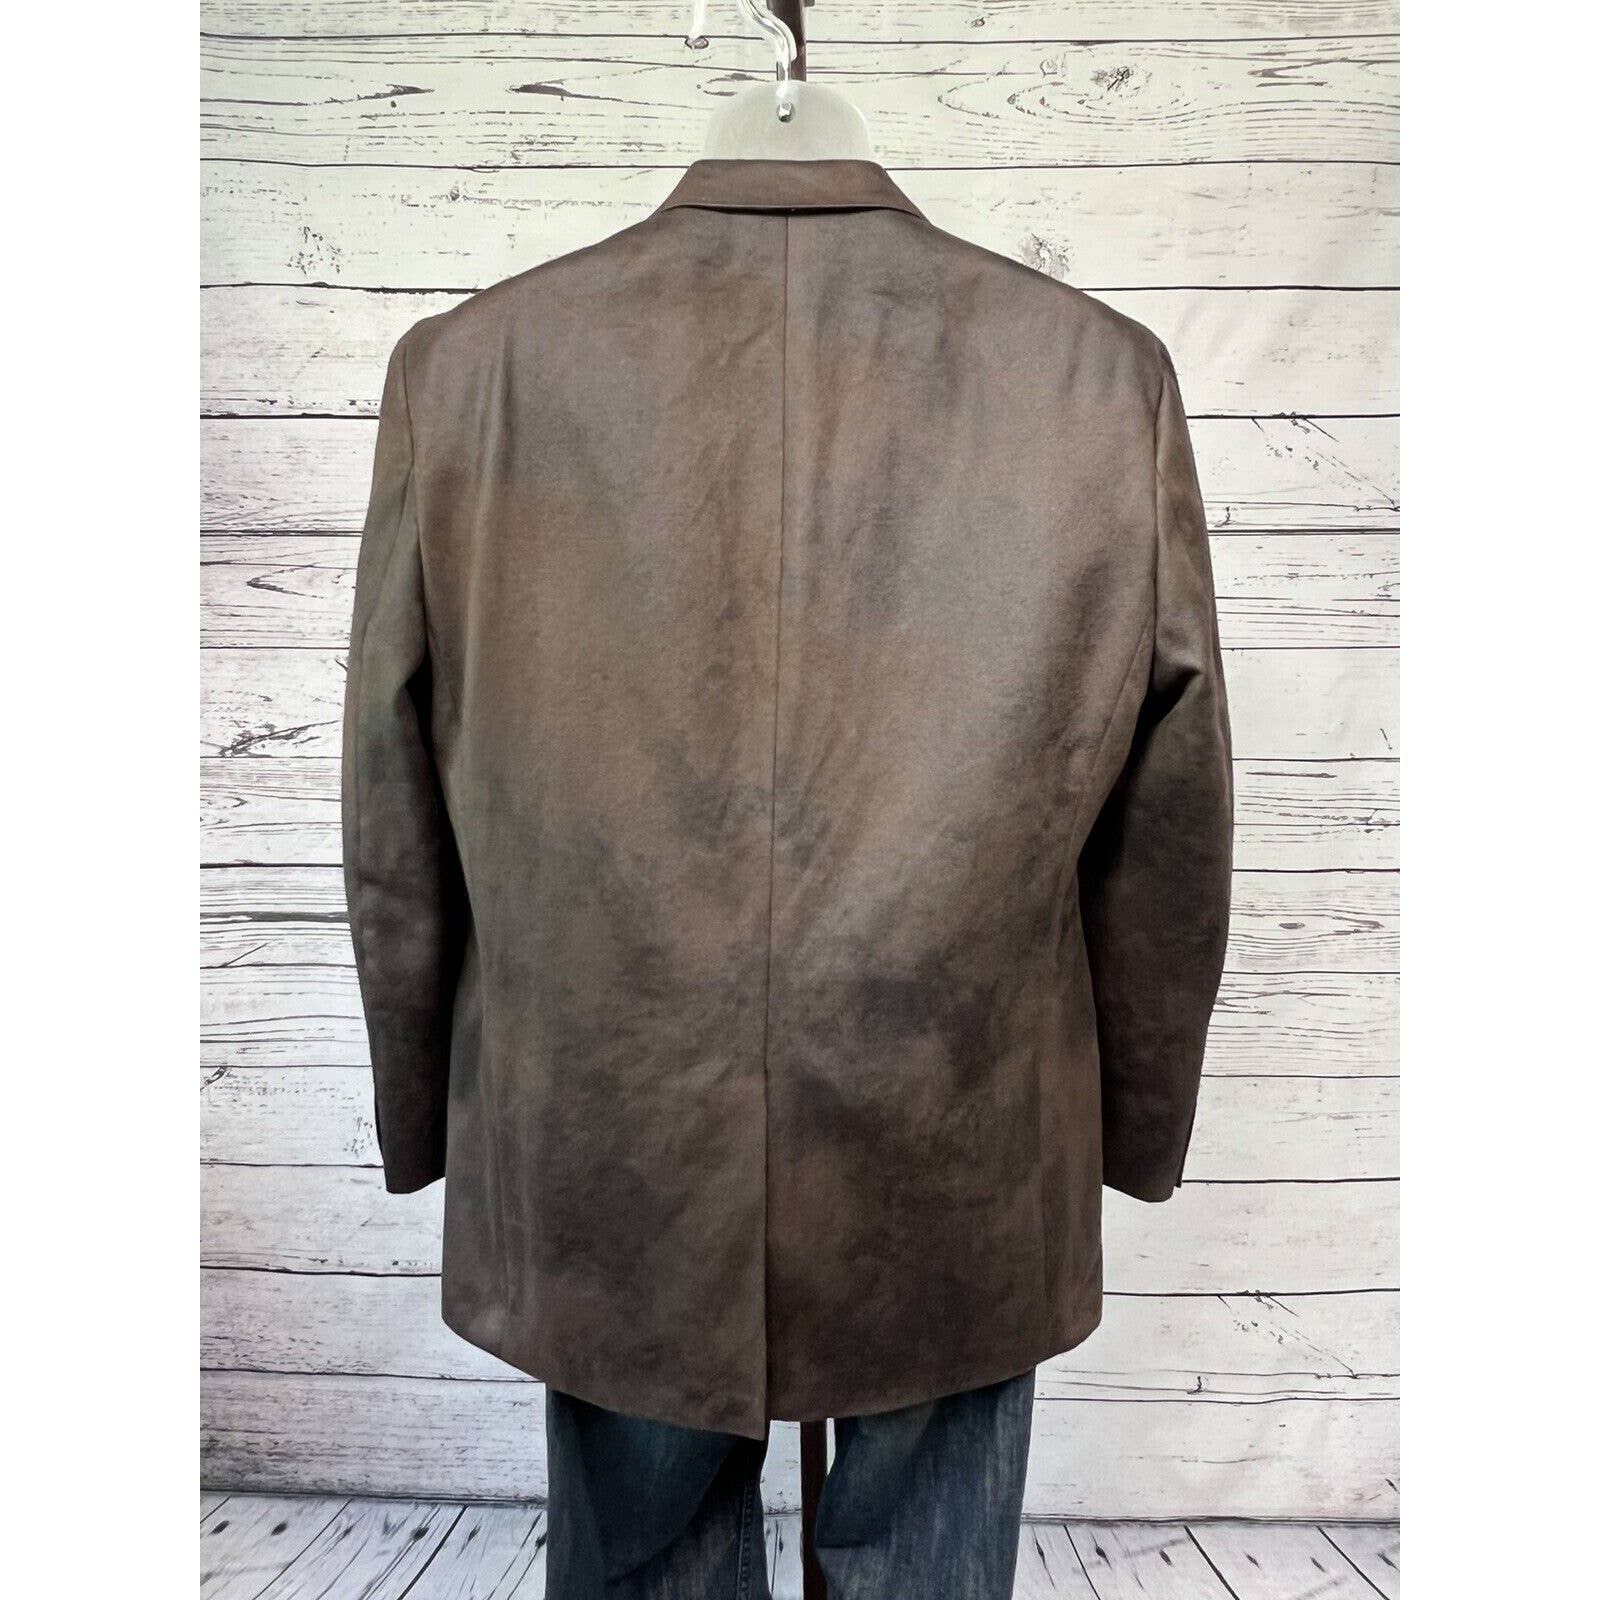 Michael Kors Men's Sport Coat 42R Distressed Faux Leather Blazer Jacket Brown